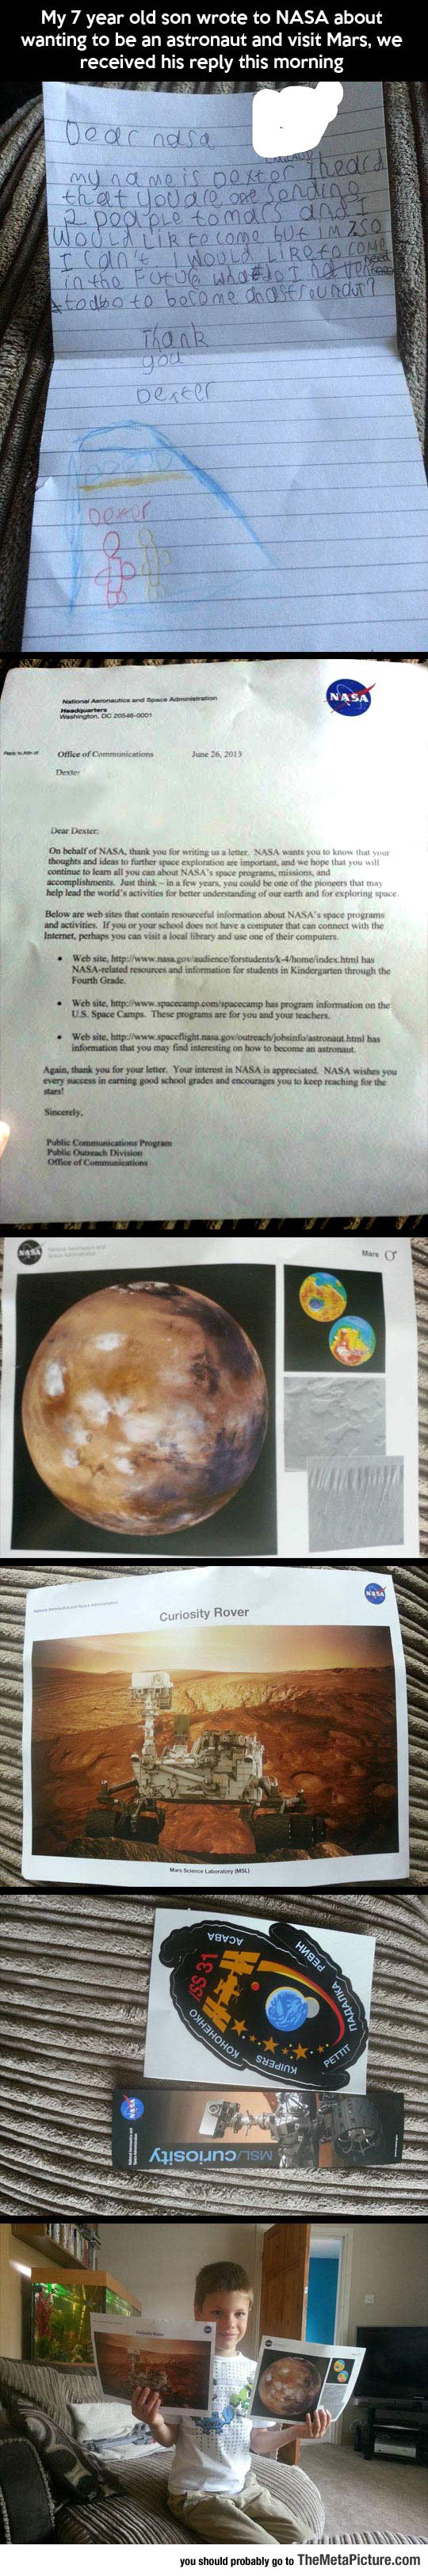 letter-NASA-kid-Mars-astronaut-dream